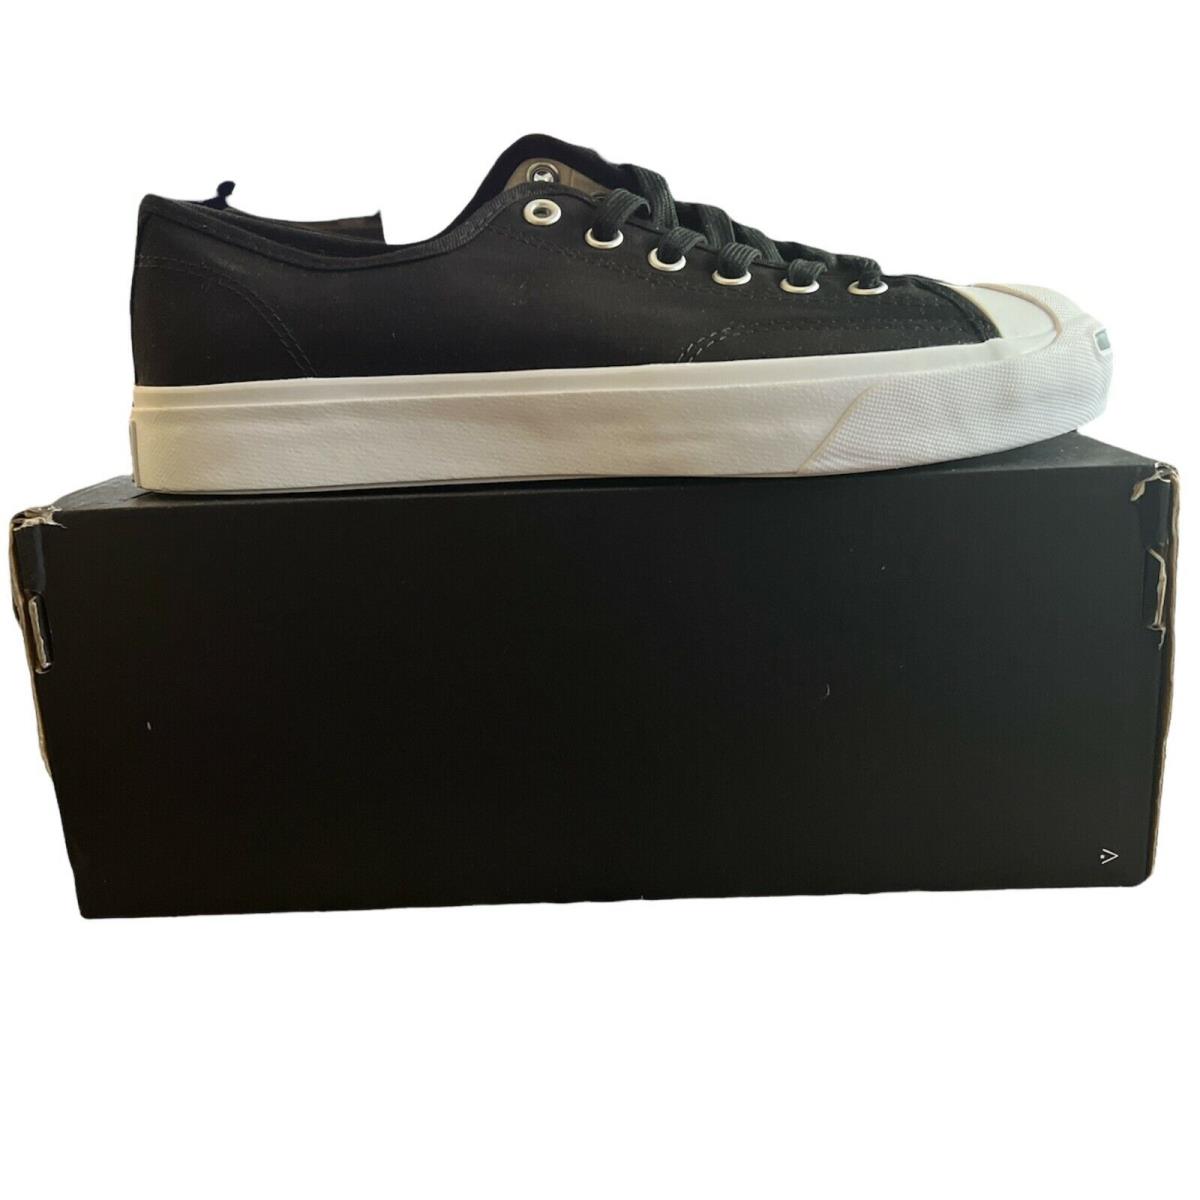 Converse Unisex Jack Purcell OX 164056C Black Lace Up Sneaker Shoes Sz M 6.5 W 8